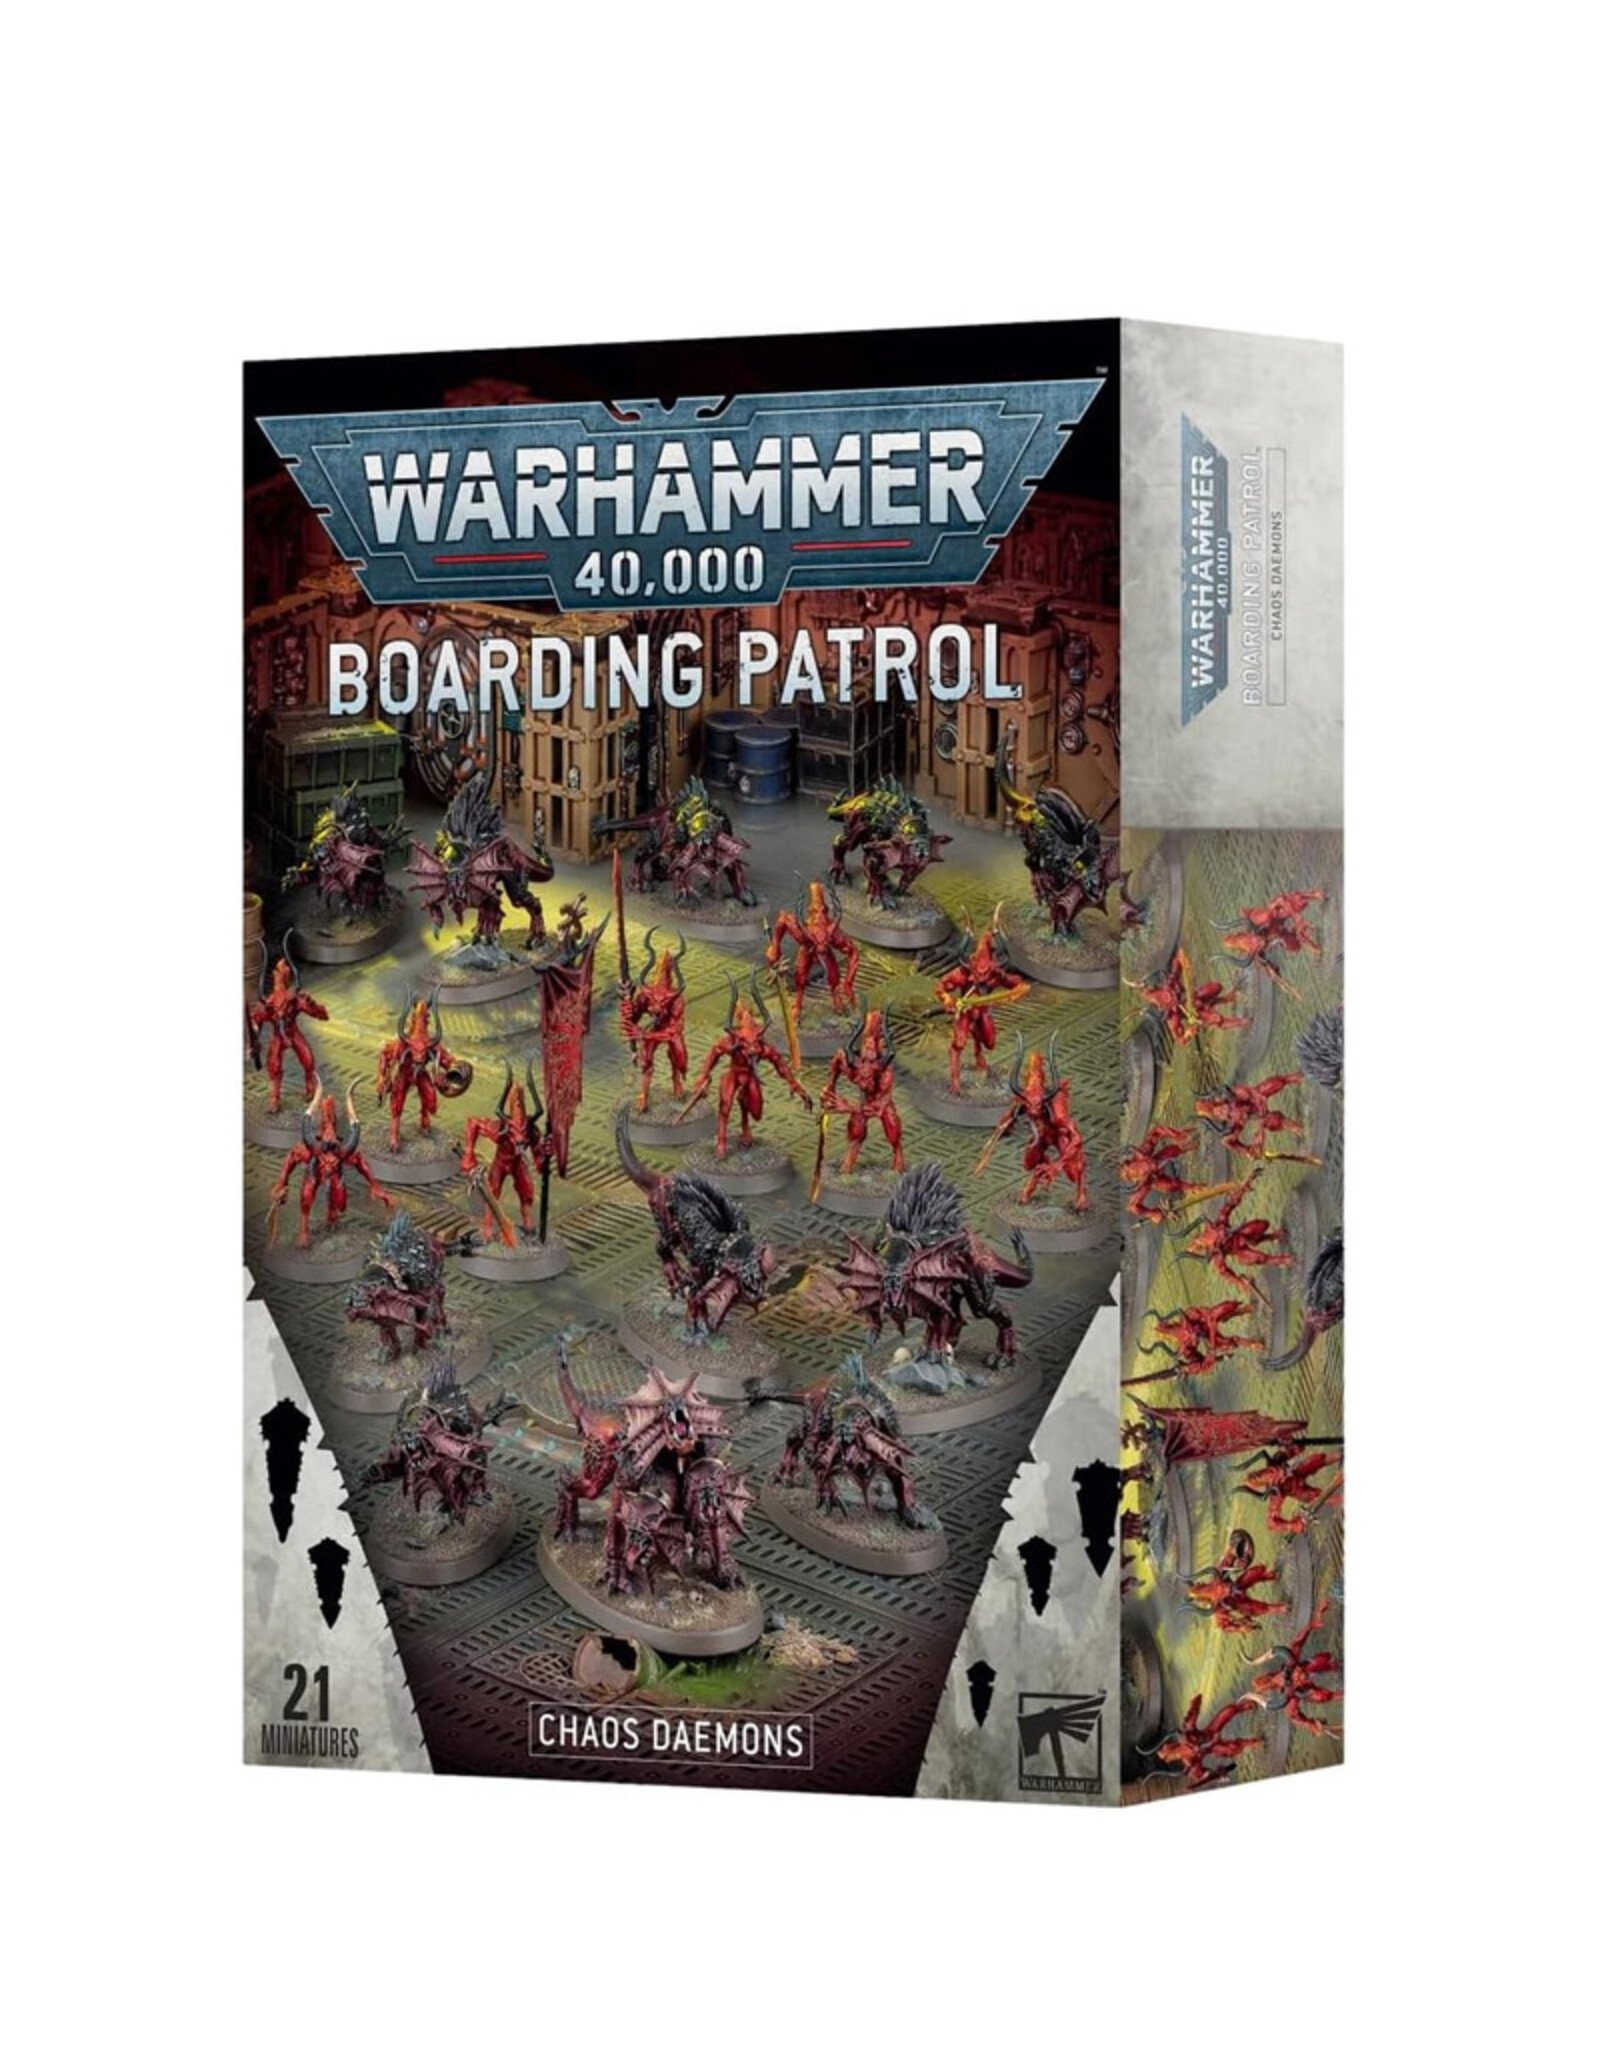 Games Workshop Warhammer 40,000 Boarding Patrol: Chaos Daemons